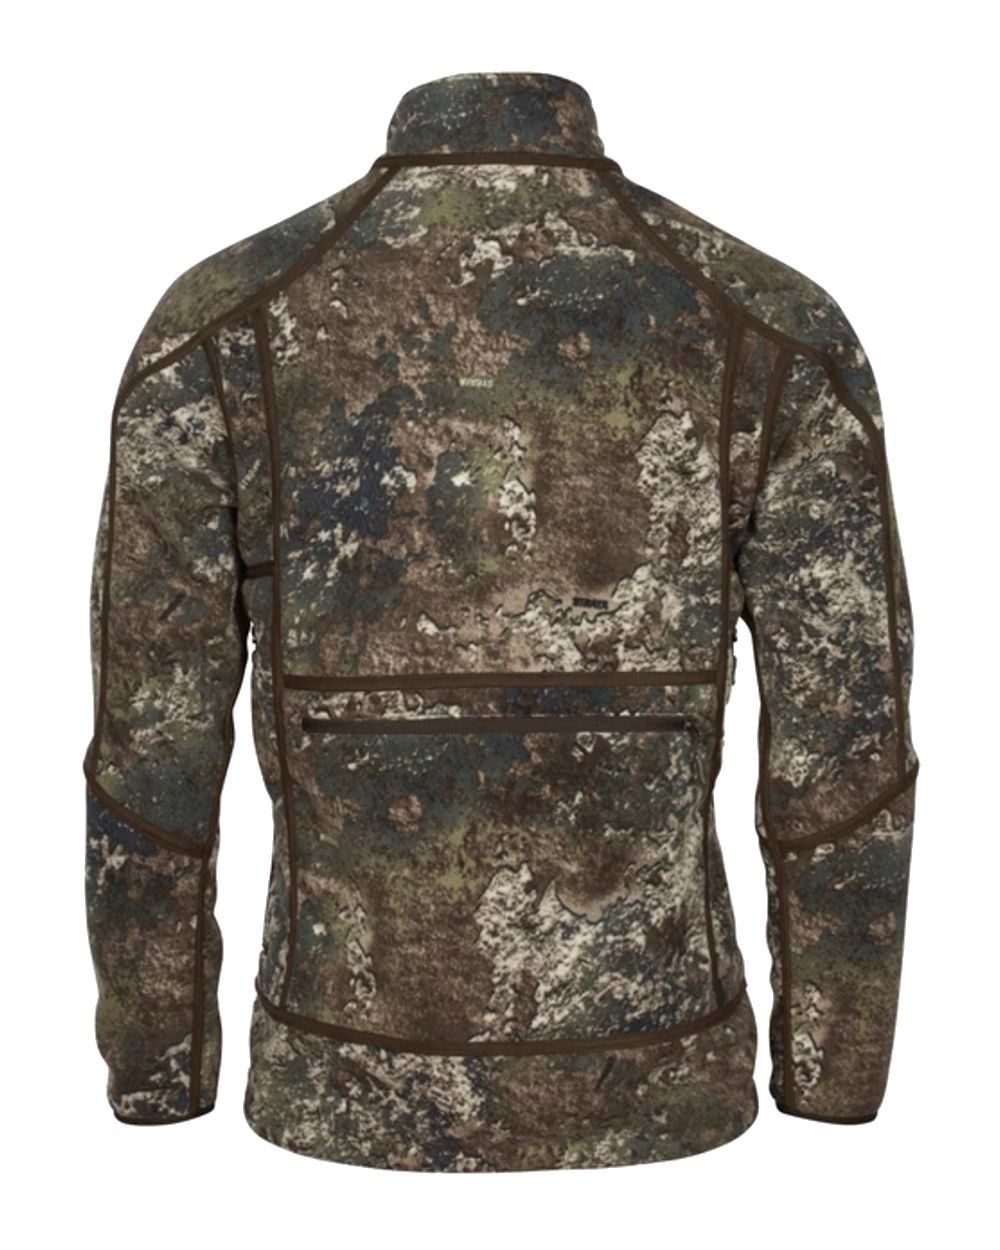 Pinewood Furudal Reversible Camou Fleece Jacket in Hunting Brown/Strata 